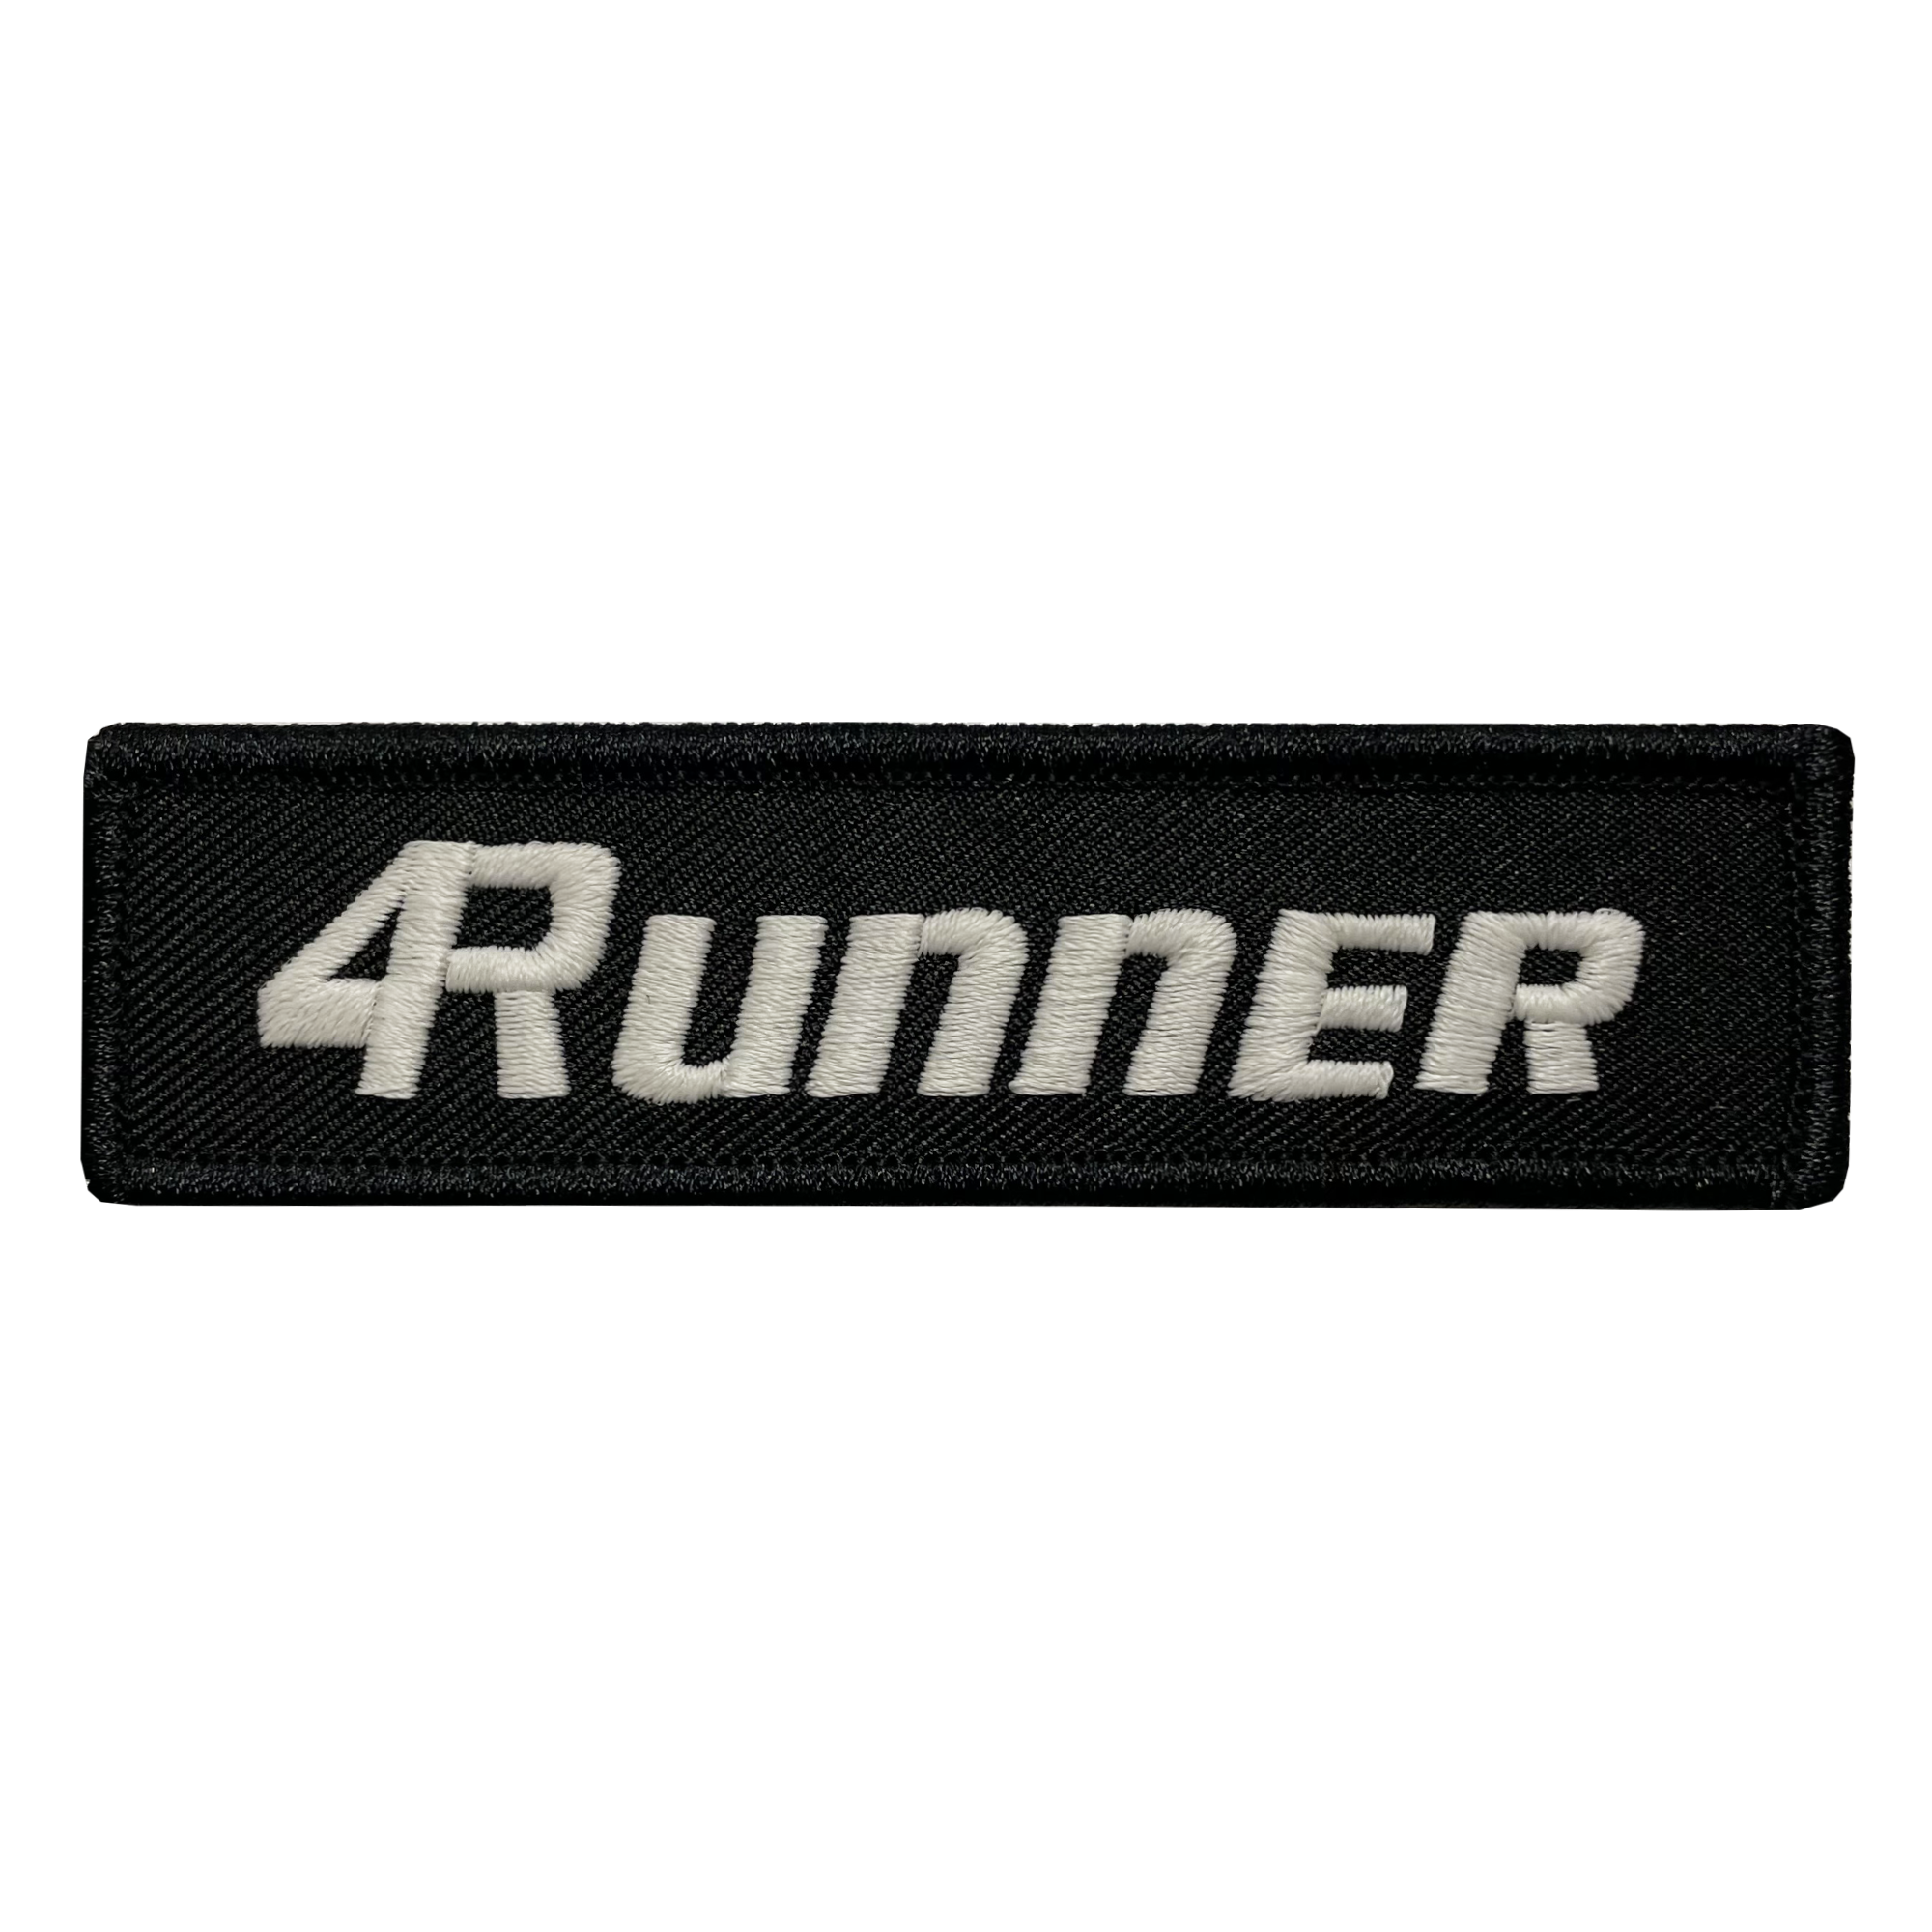 4Runner Black Name Tape Patch - GZila Designs